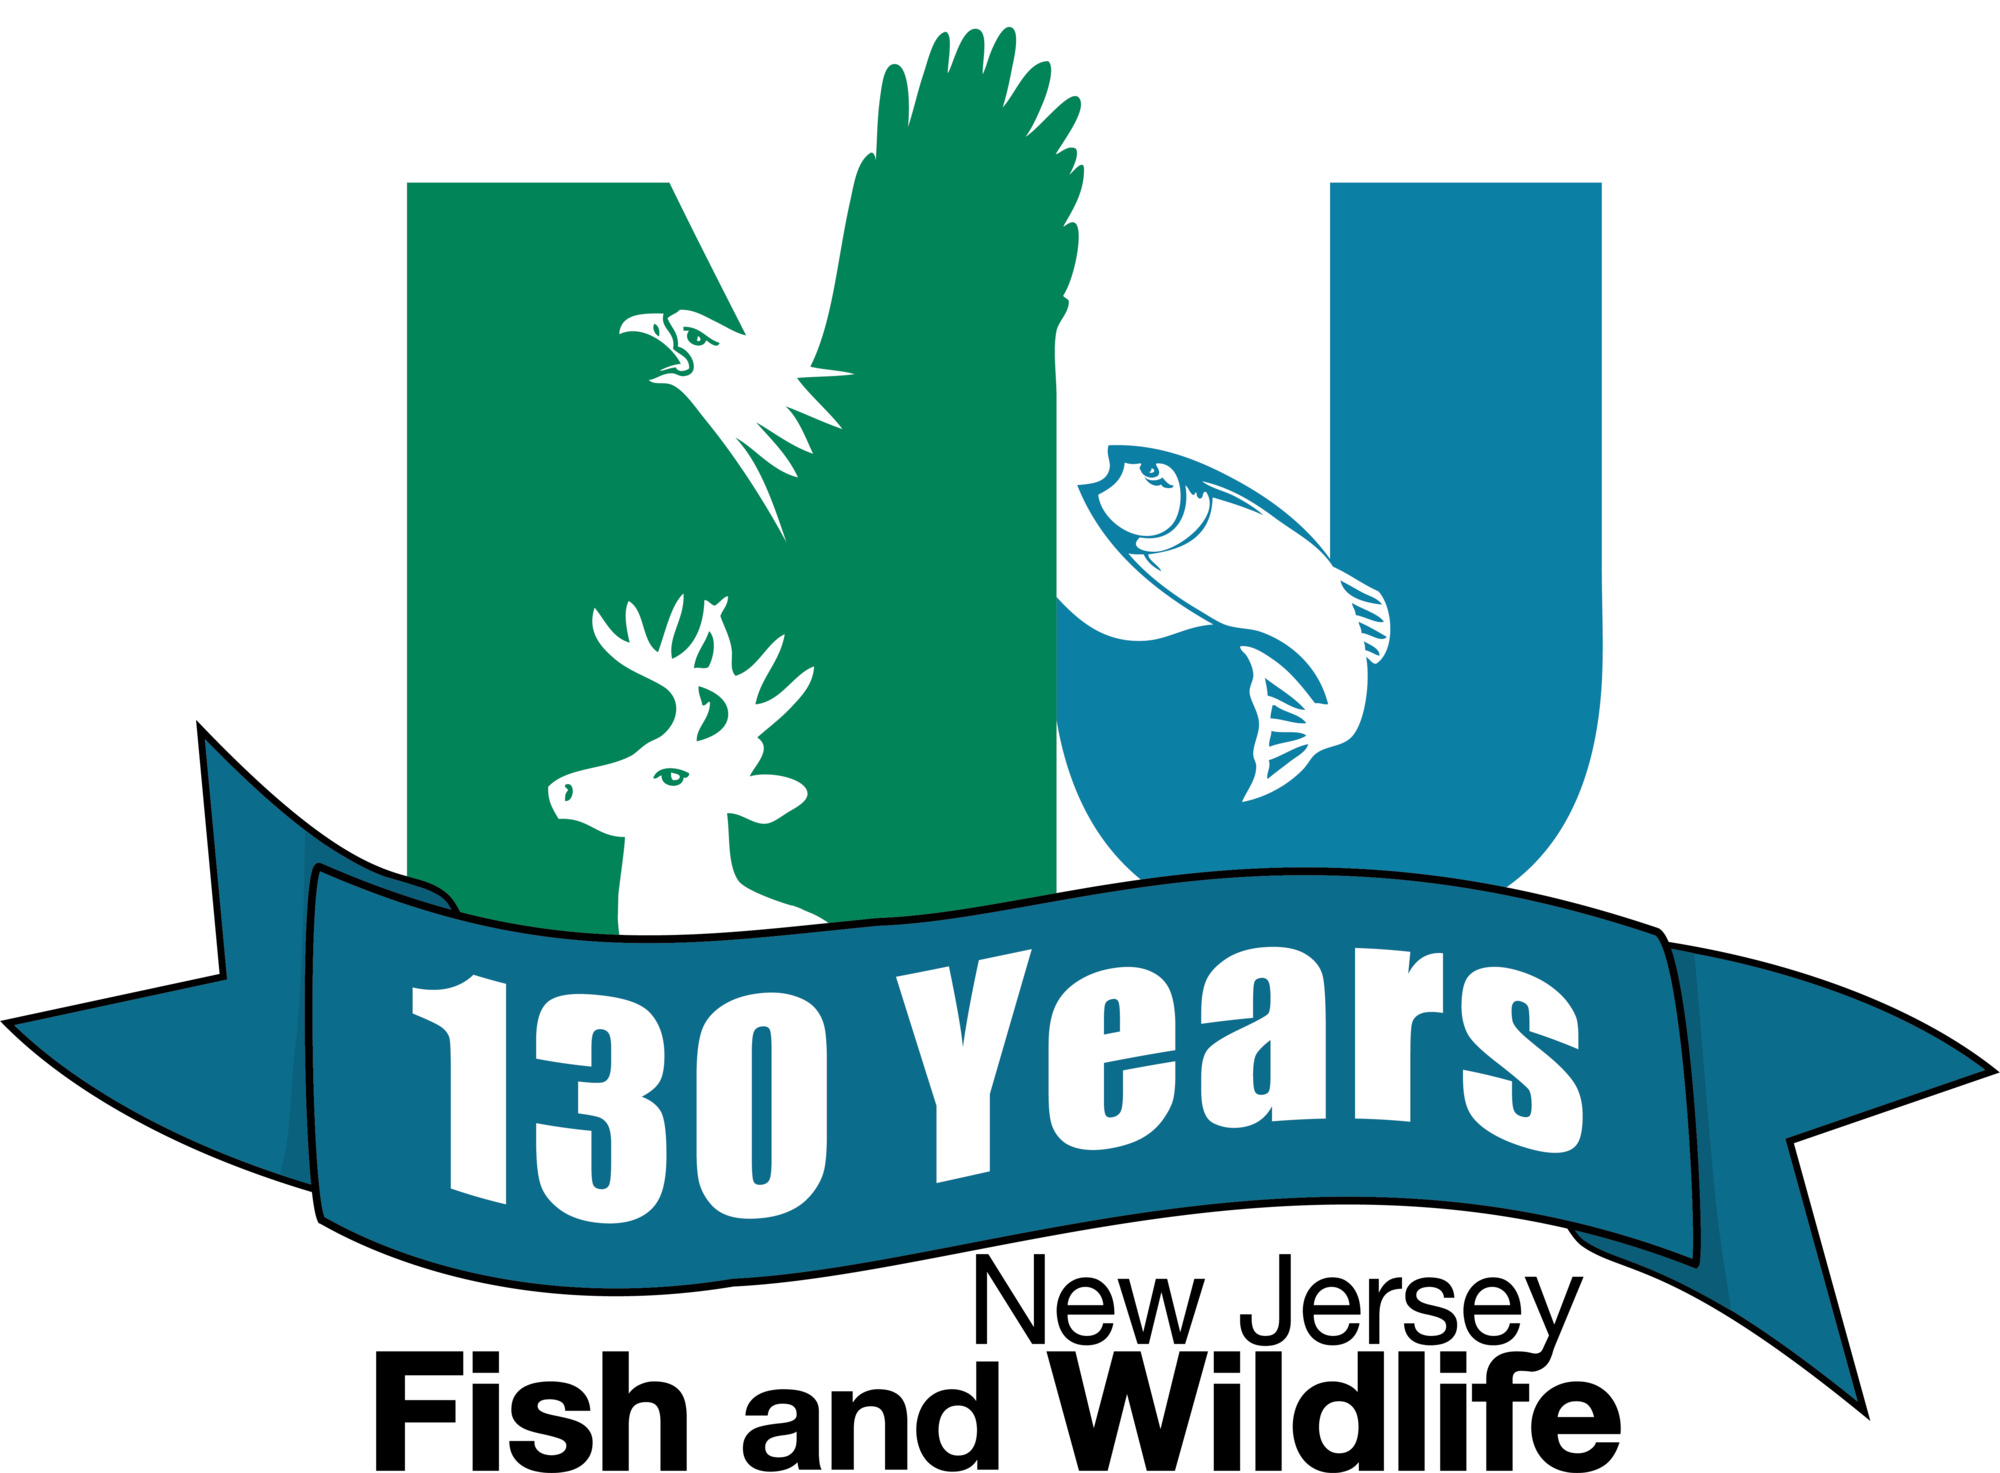 New Jersey Division of Fish & Wildlife 130 year anniversary